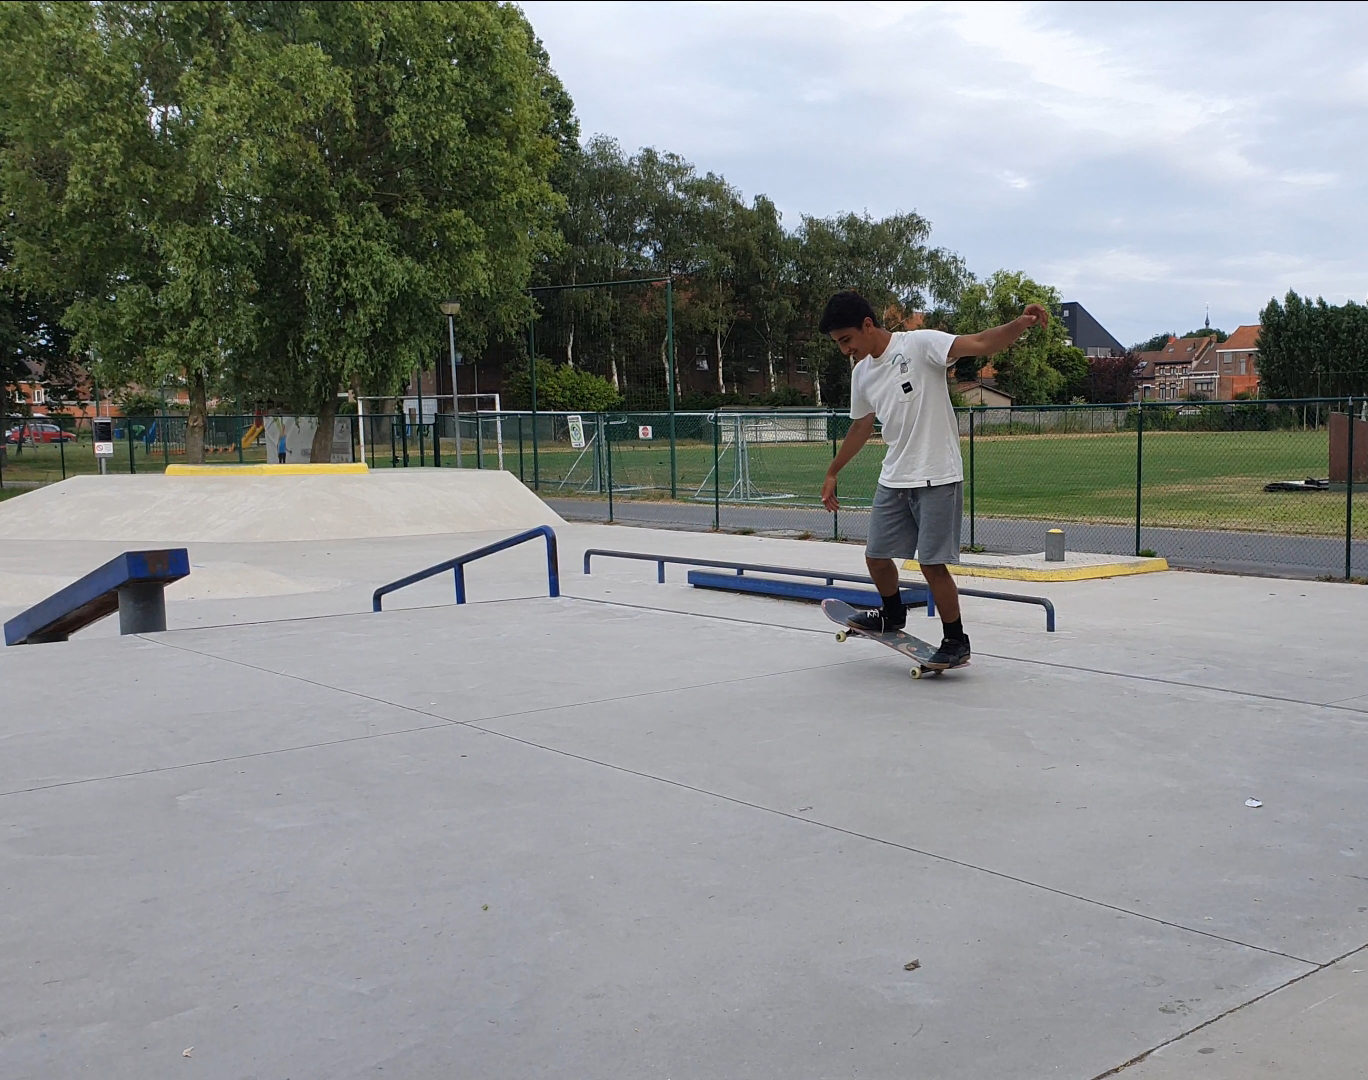 Manual by @nour_nassaj at Skatepark Temse. Photo: Unknown